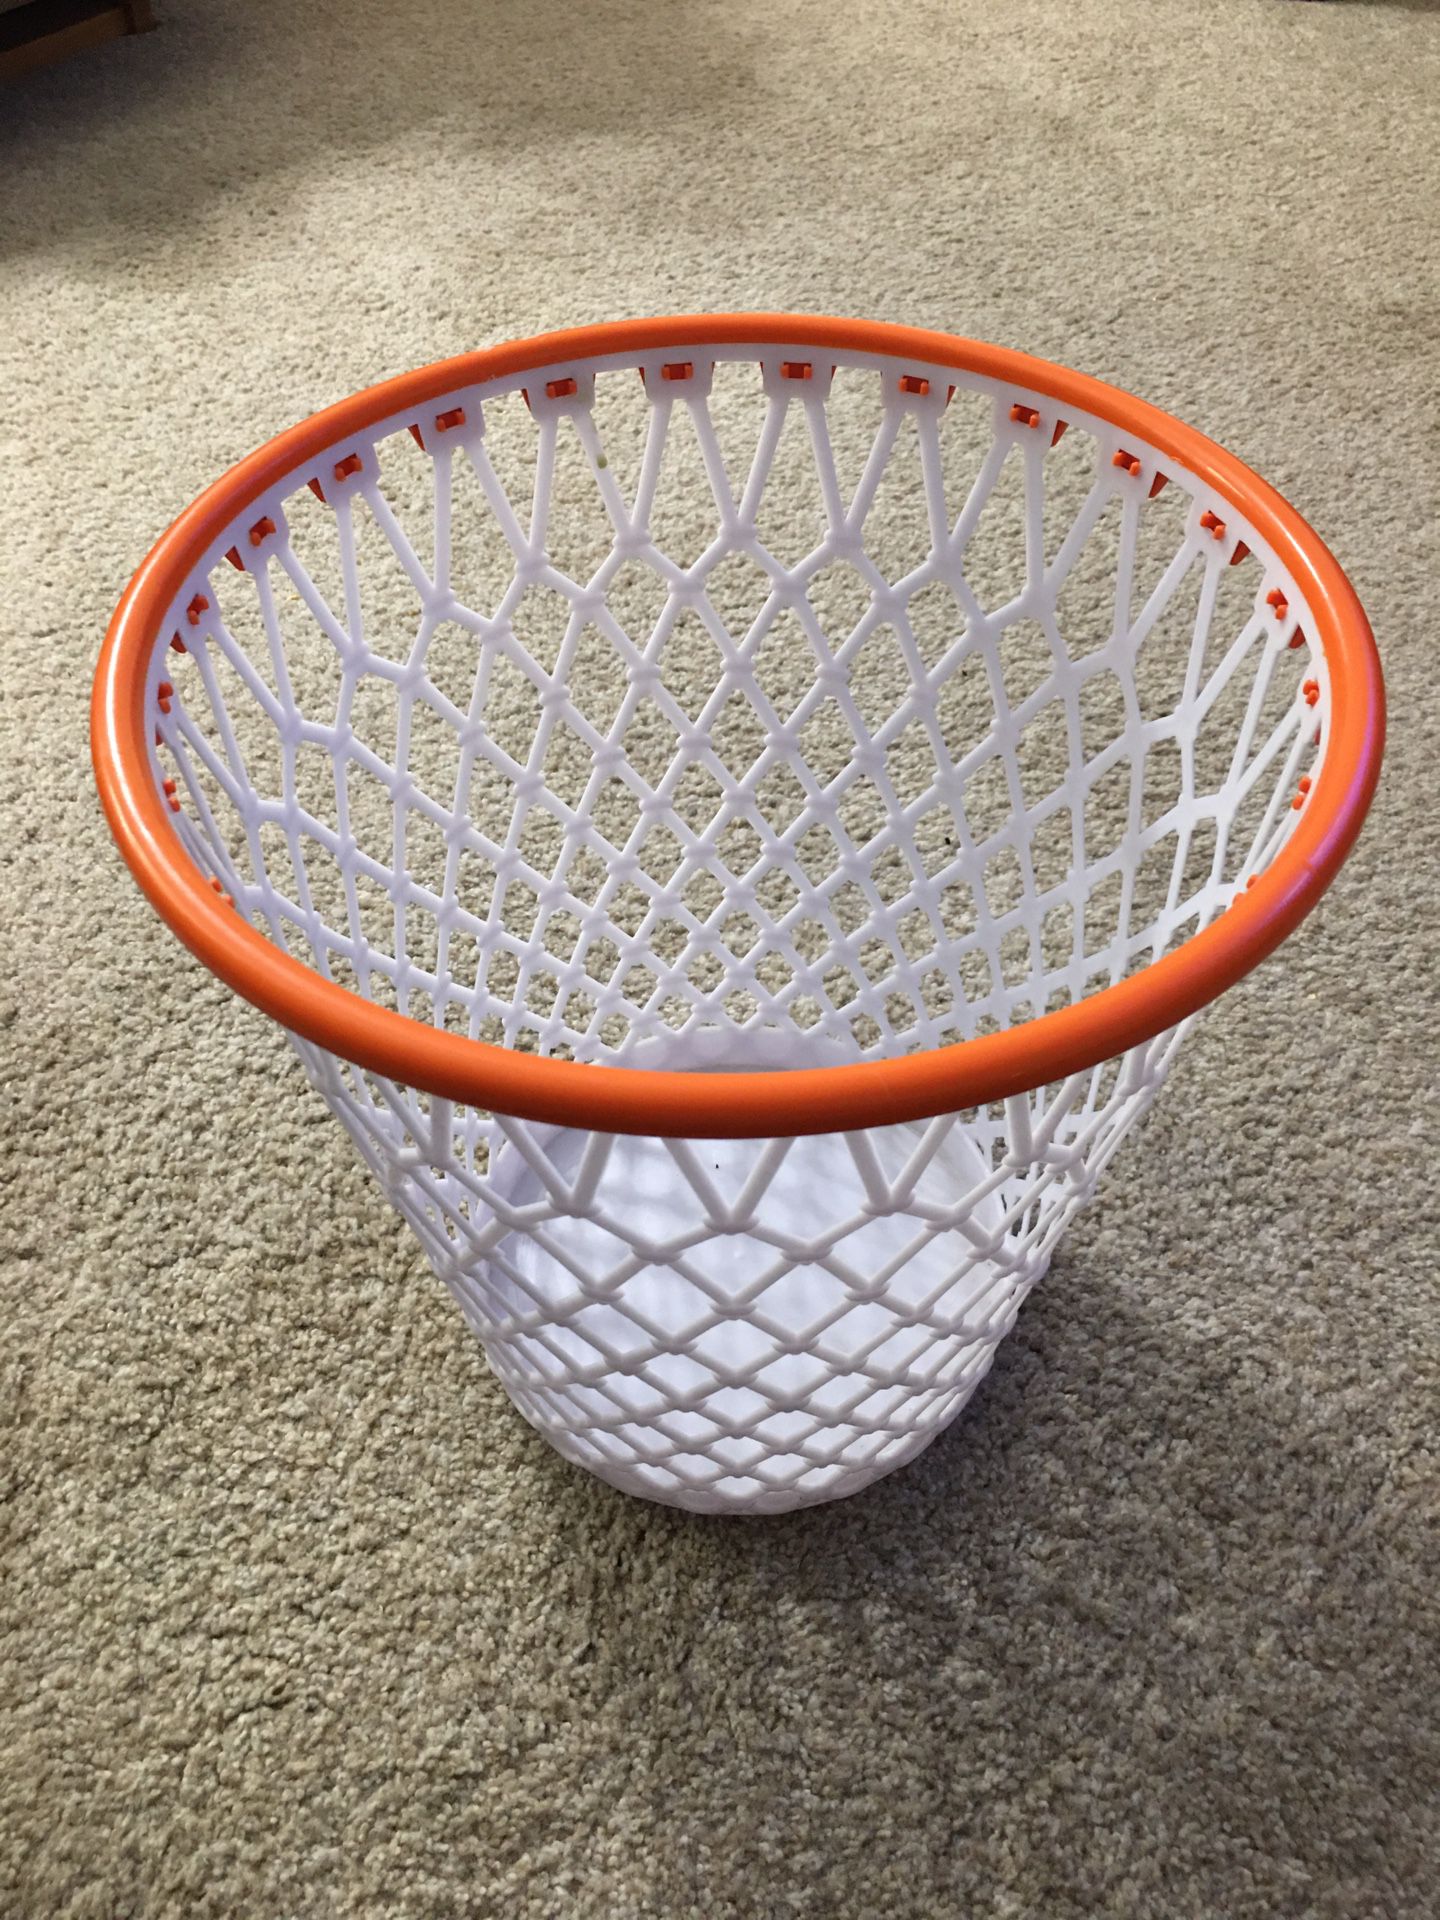 Basketball hoop trash can